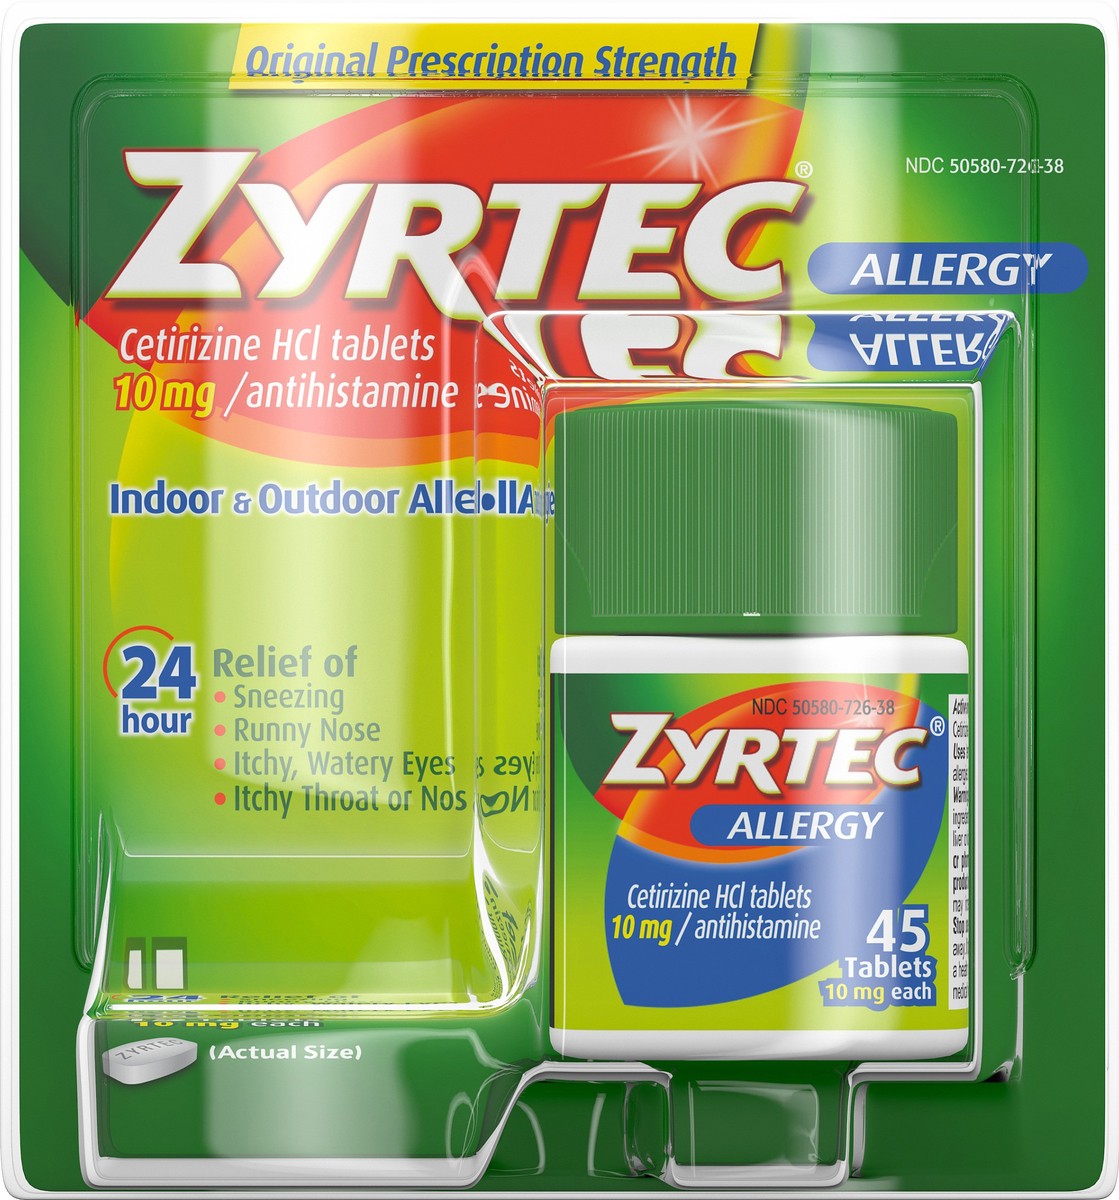 slide 3 of 7, Zyrtec 24 Hour Allergy Relief Tablets, Antihistamine Indoor & Outdoor Allergy Medicine with 10 mg Cetirizine HCl, 45 ct, 45 ct